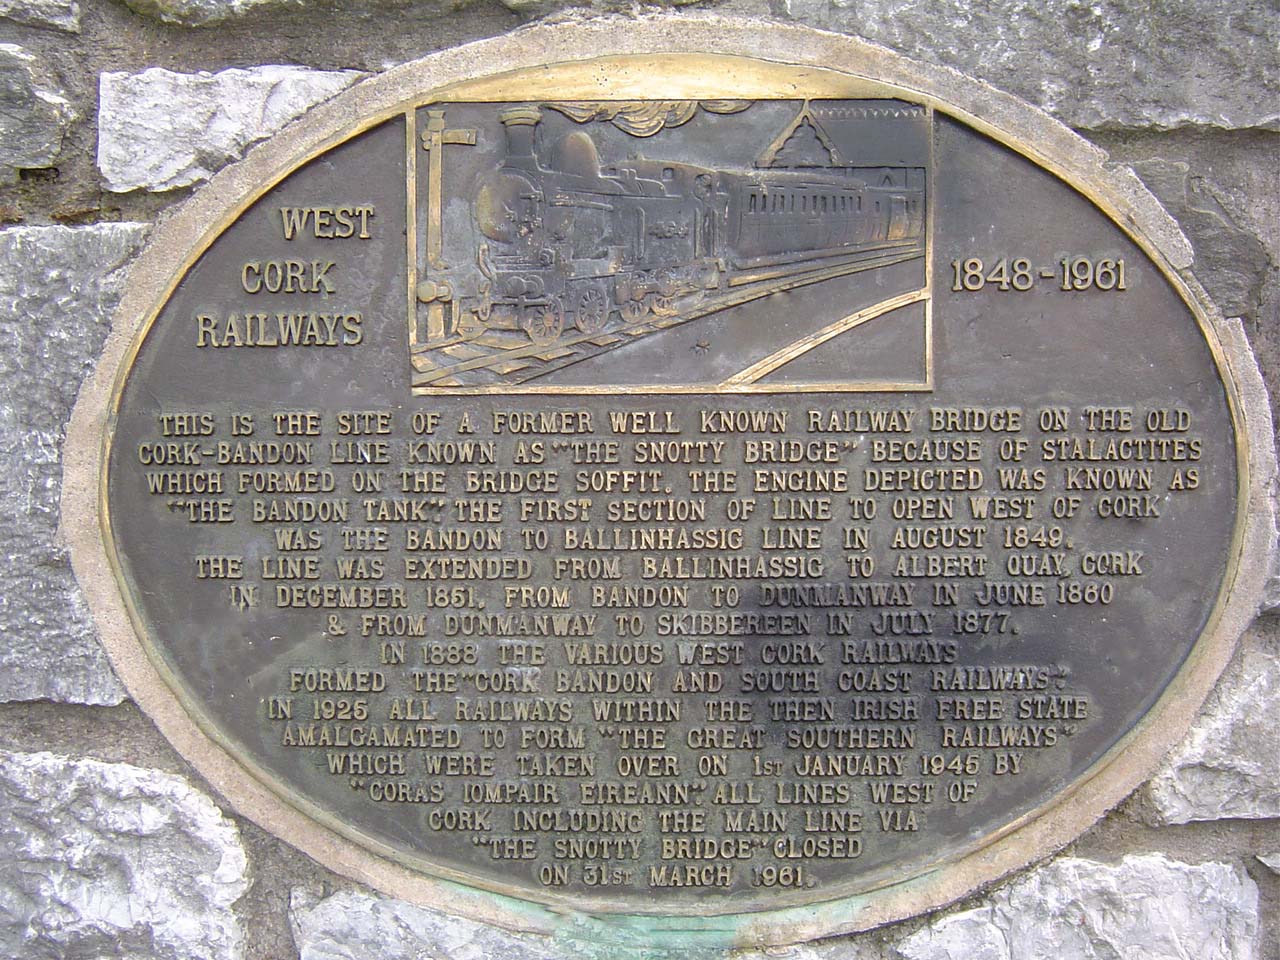 Commemorative Plaque to the 1848-1961 West Cork Railways: Cork City